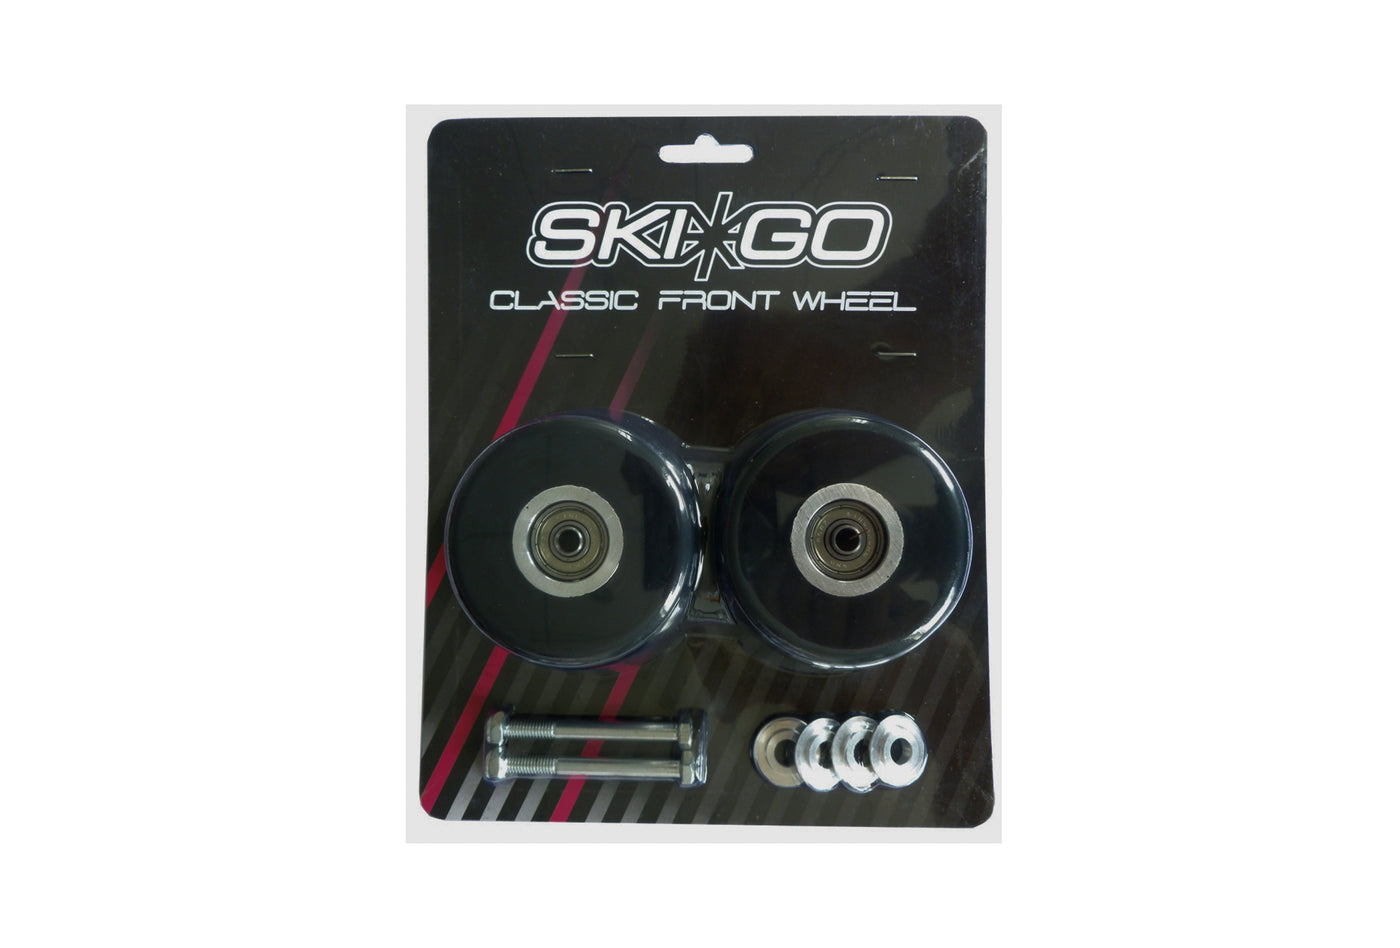 SkiGo Classic Front Wheels No. 2